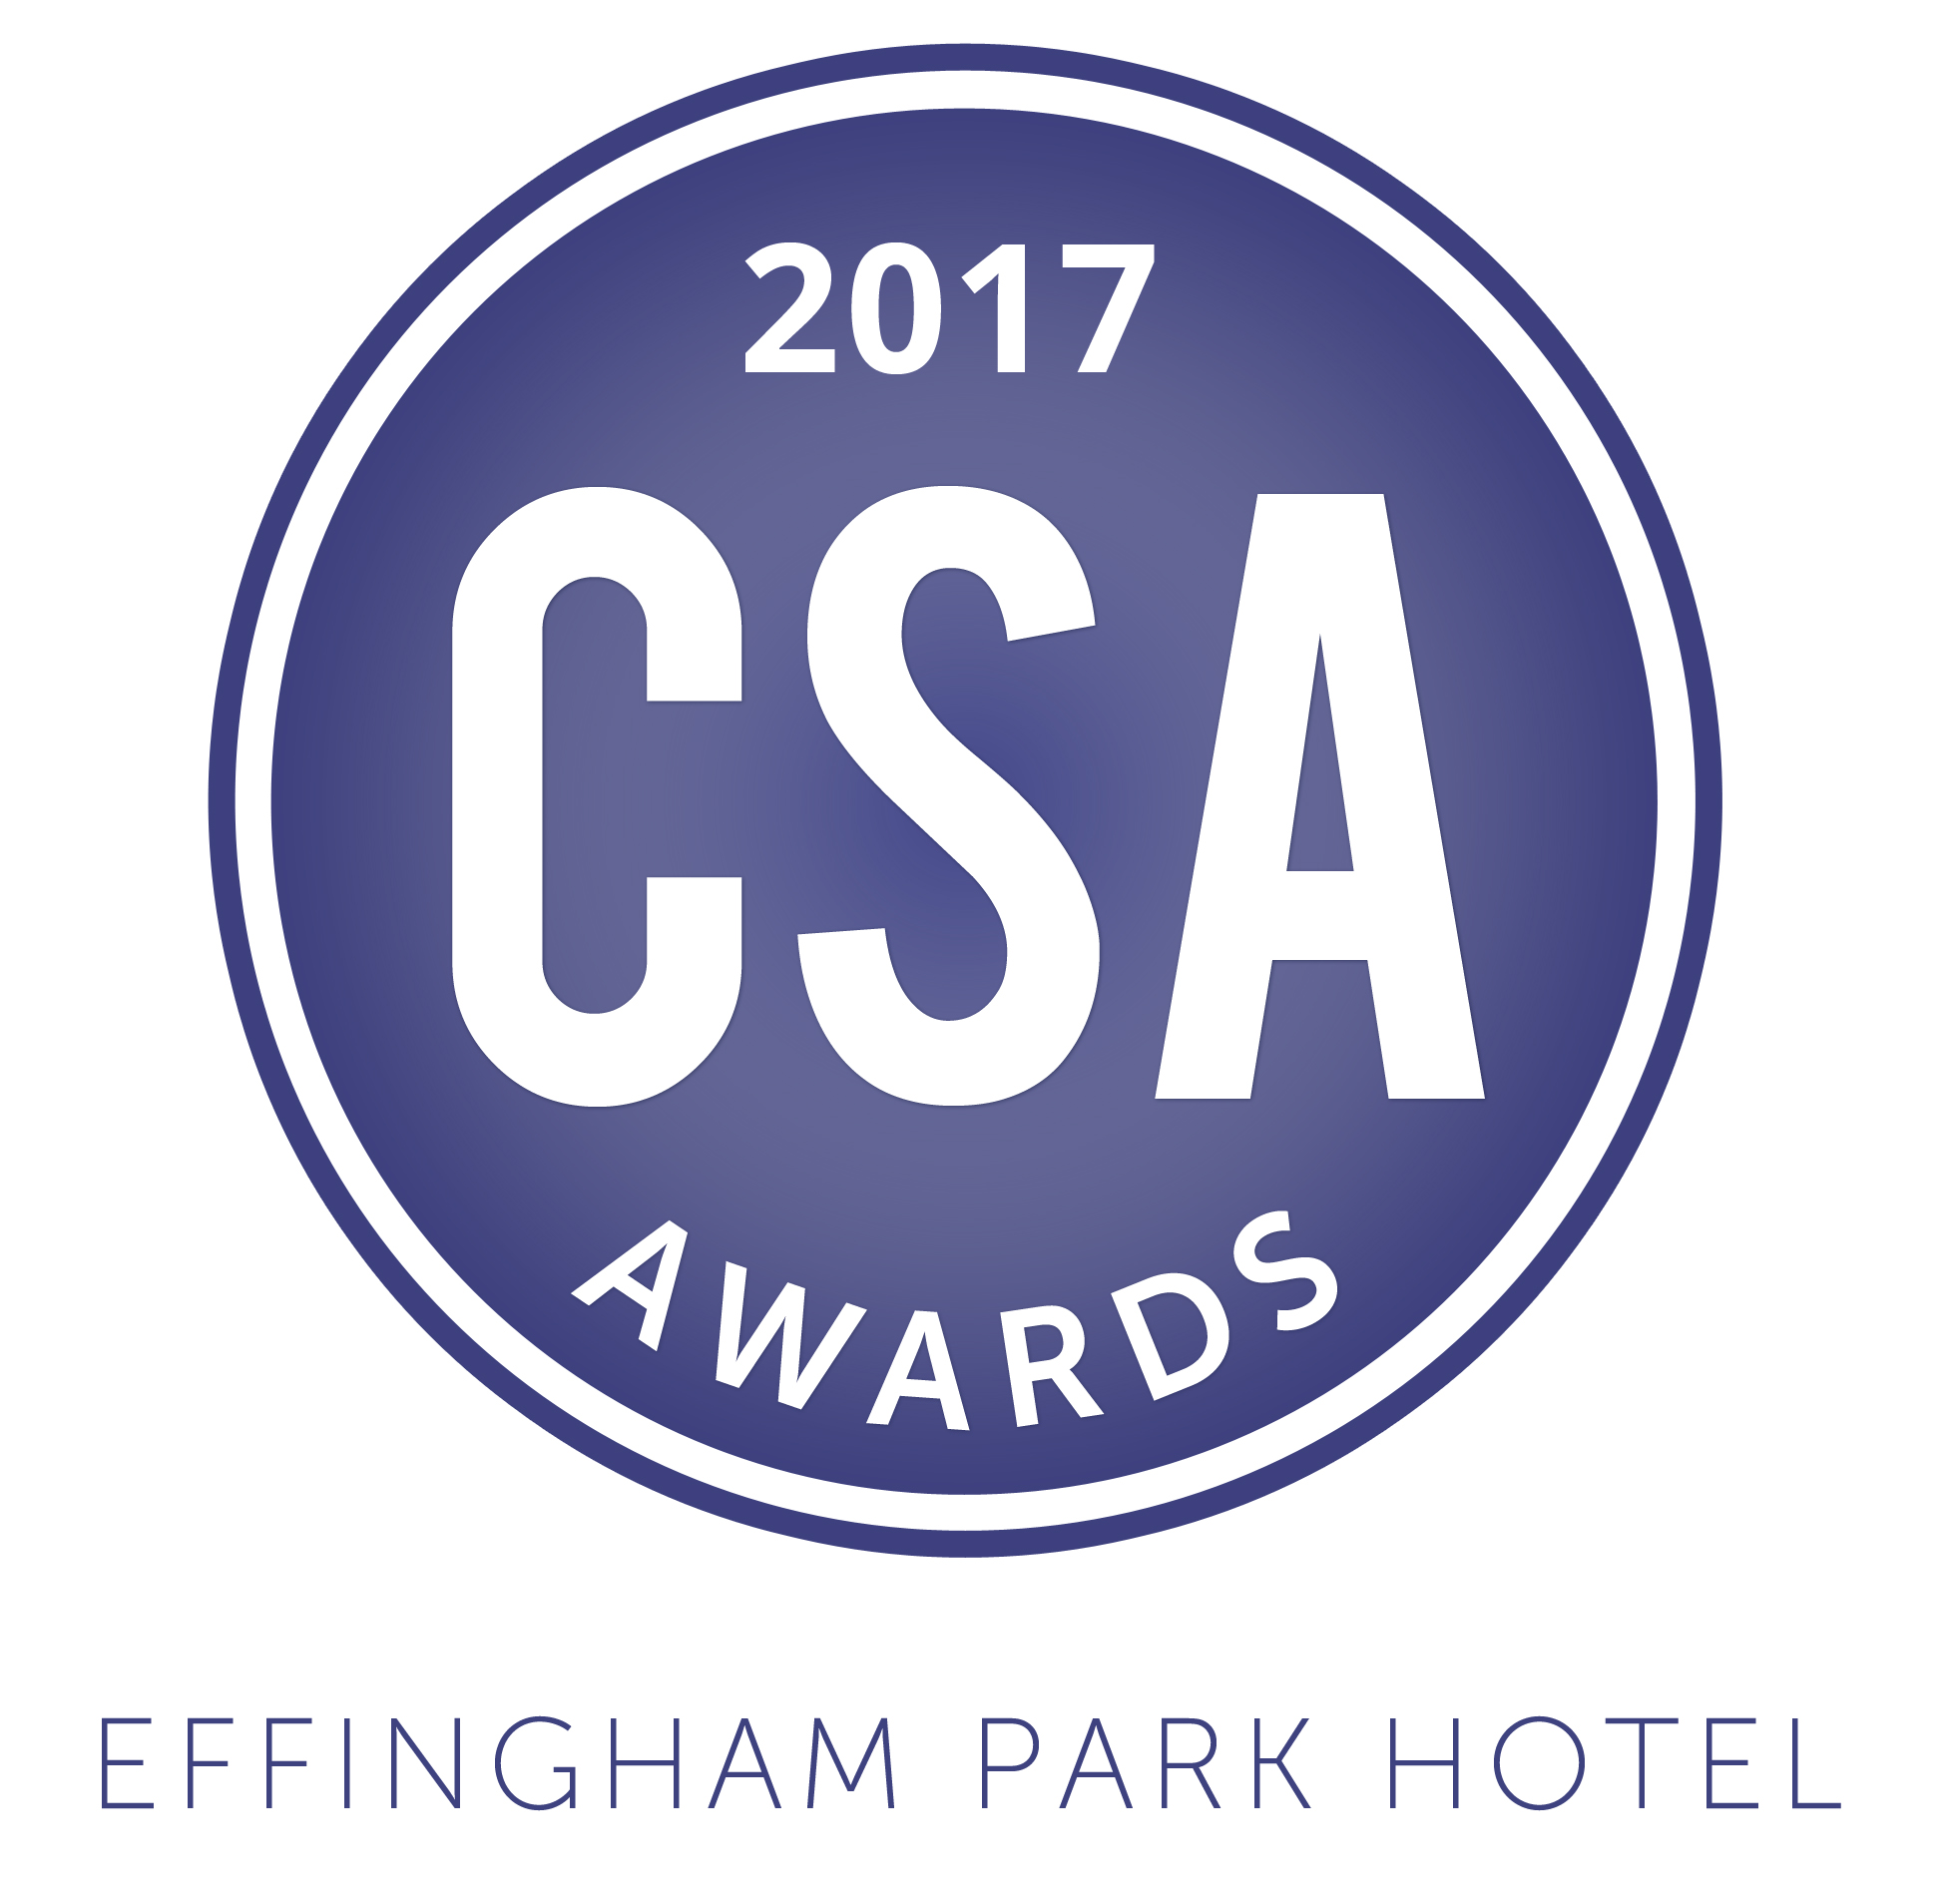 Nominations sought as CSA Awards deadline approaches